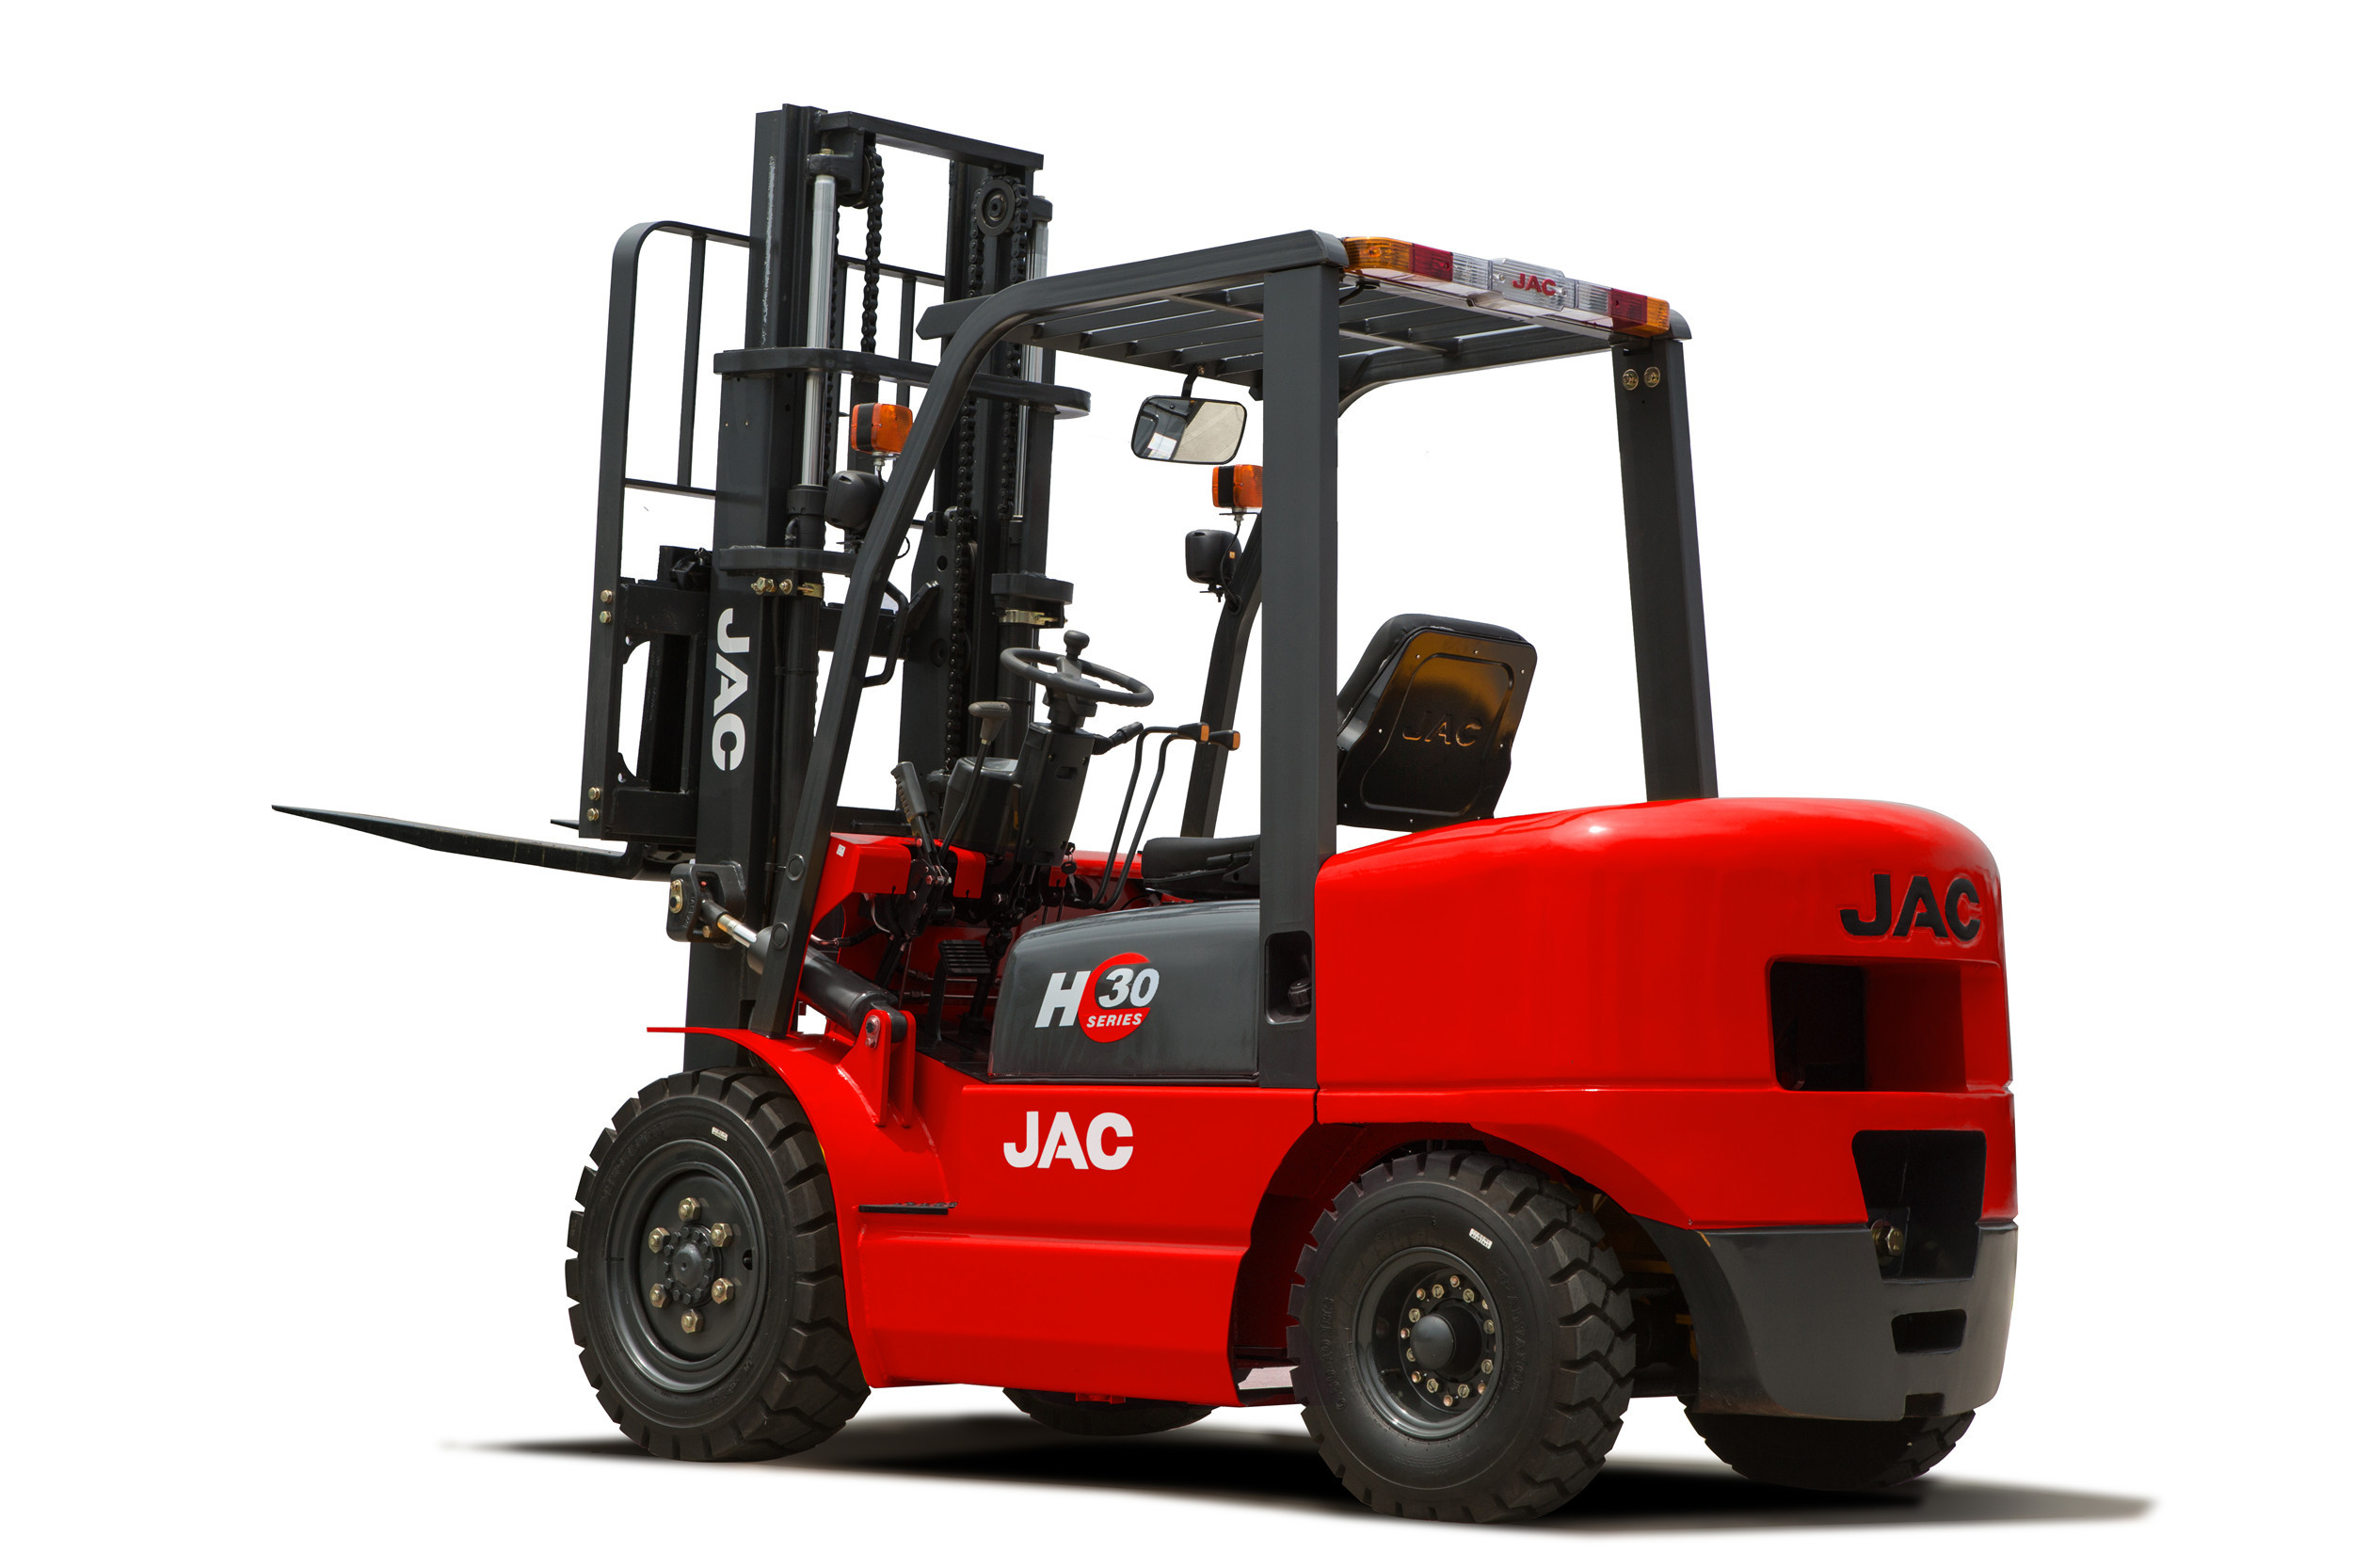 3 Ton JAC Diesel Forklift Truck Lift Height 3M - 6M Isuzu Engine Red Color